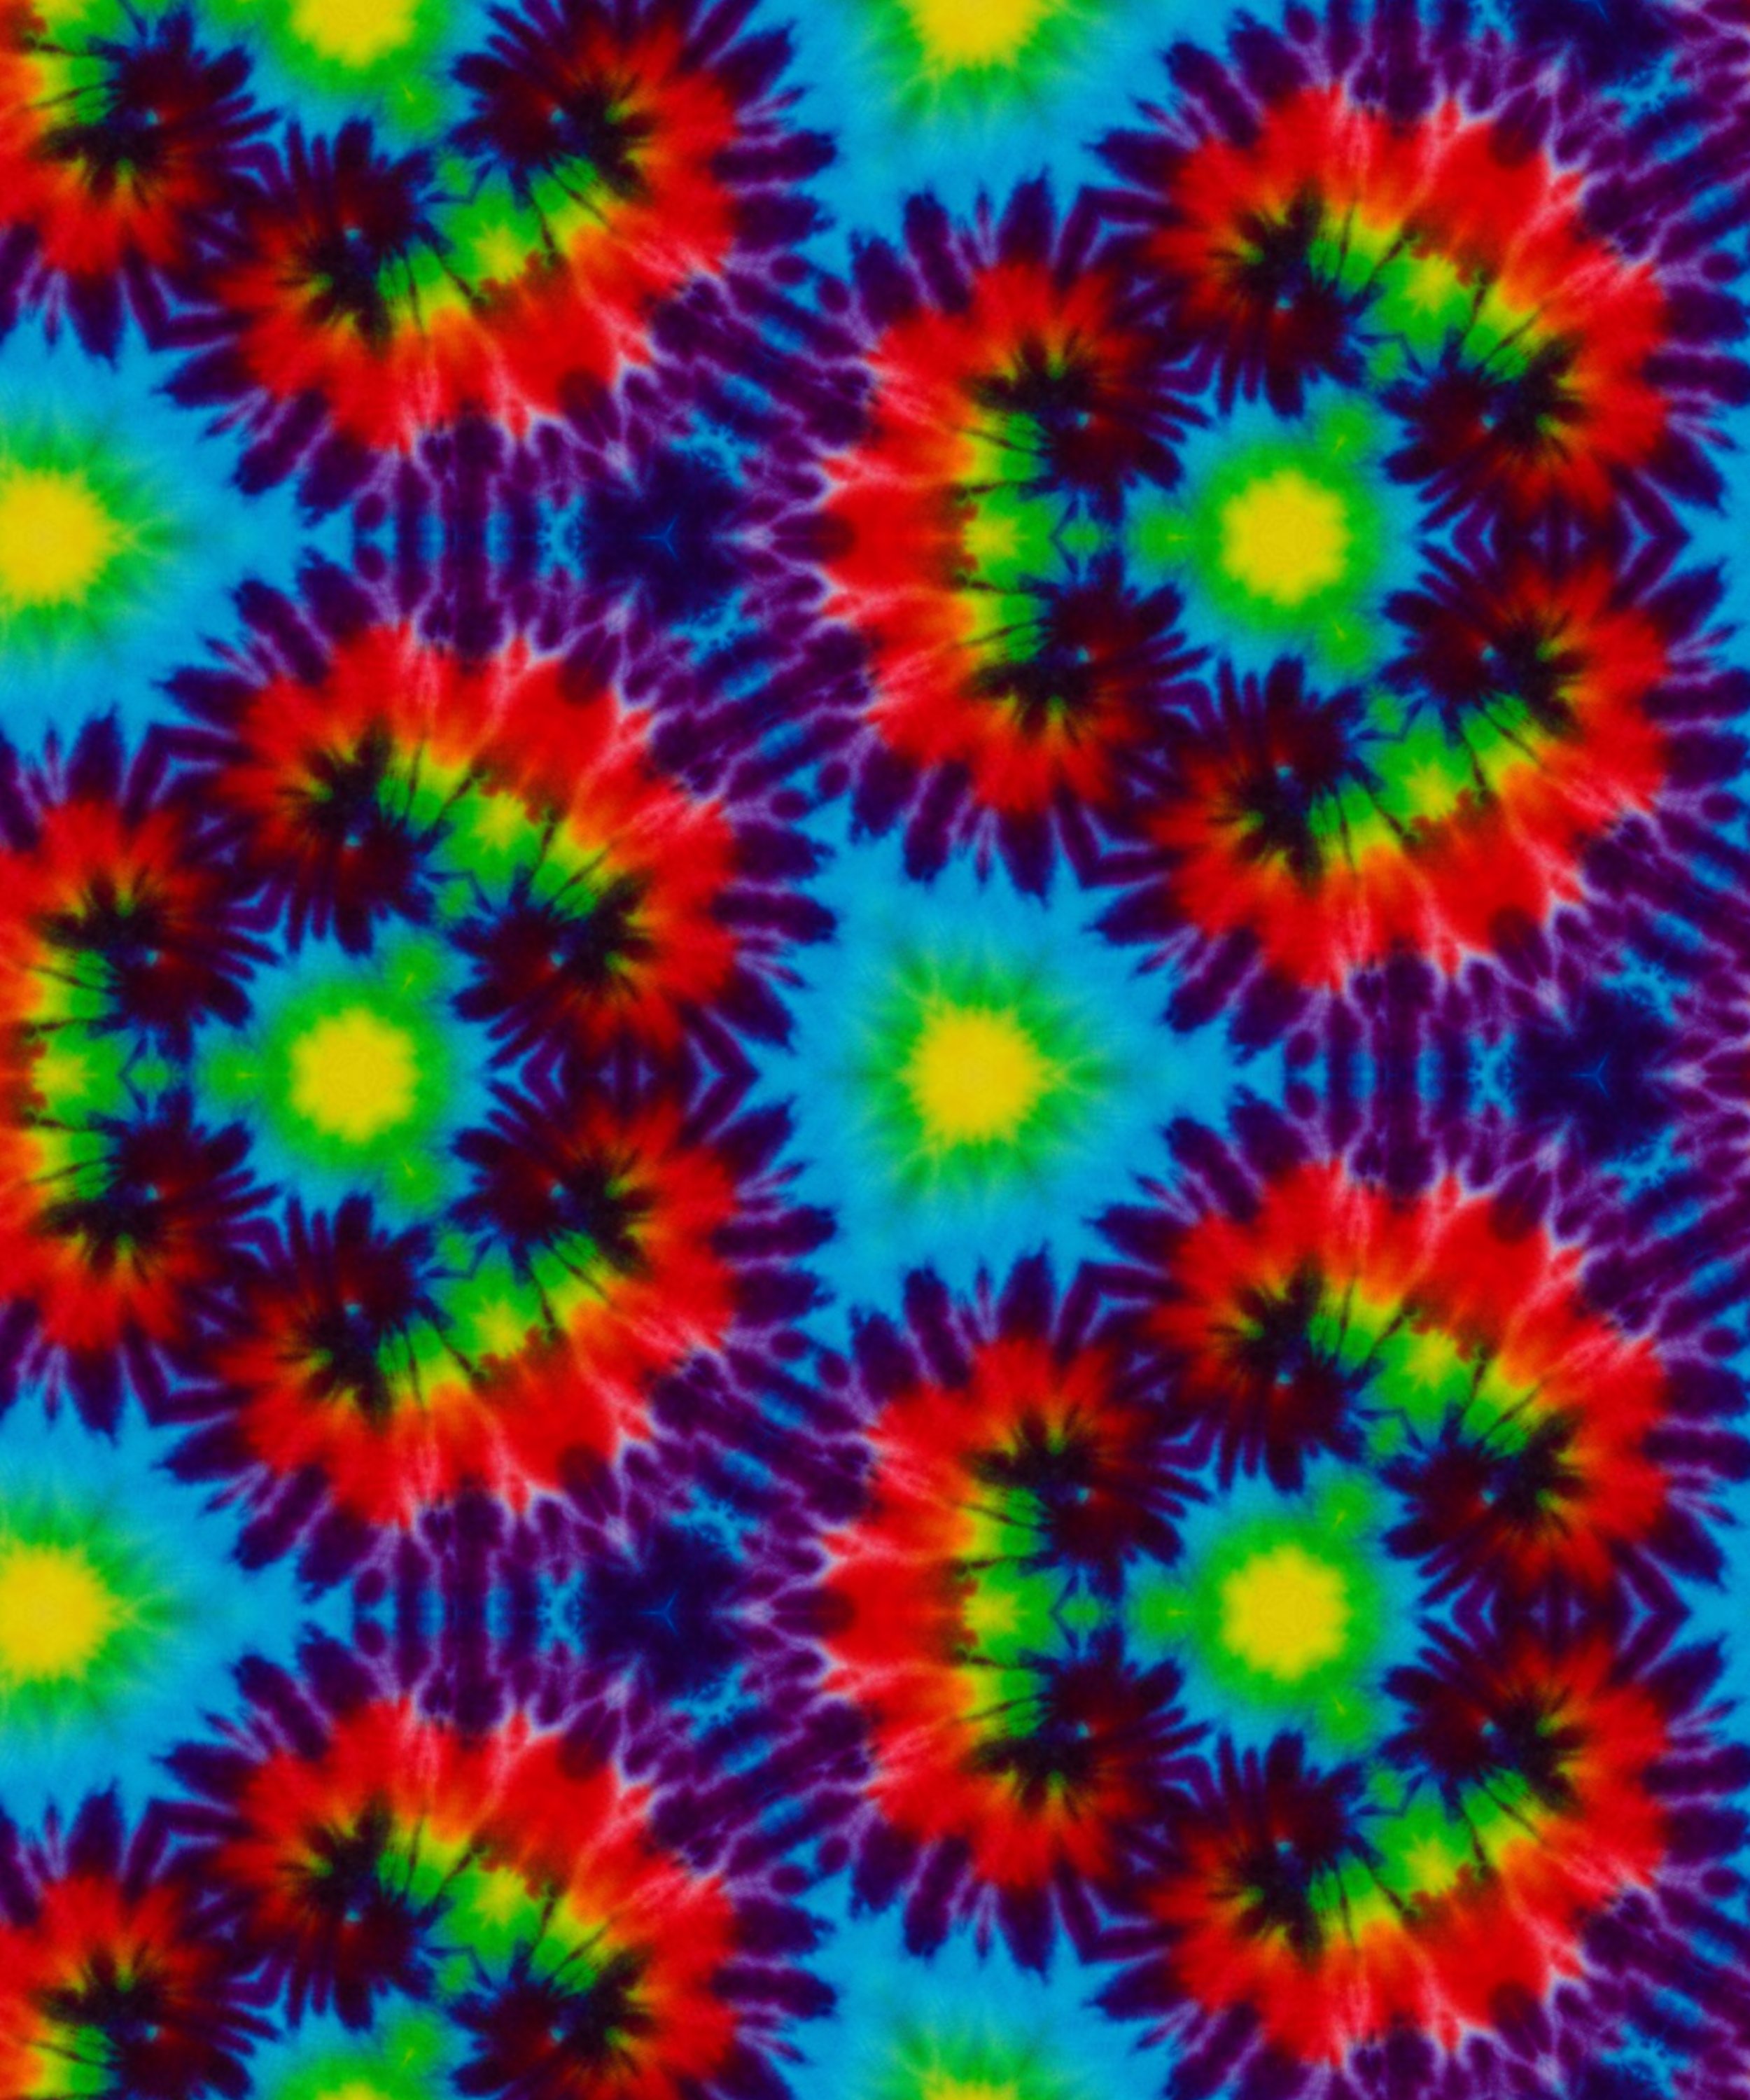 tie dye pattern cover image.